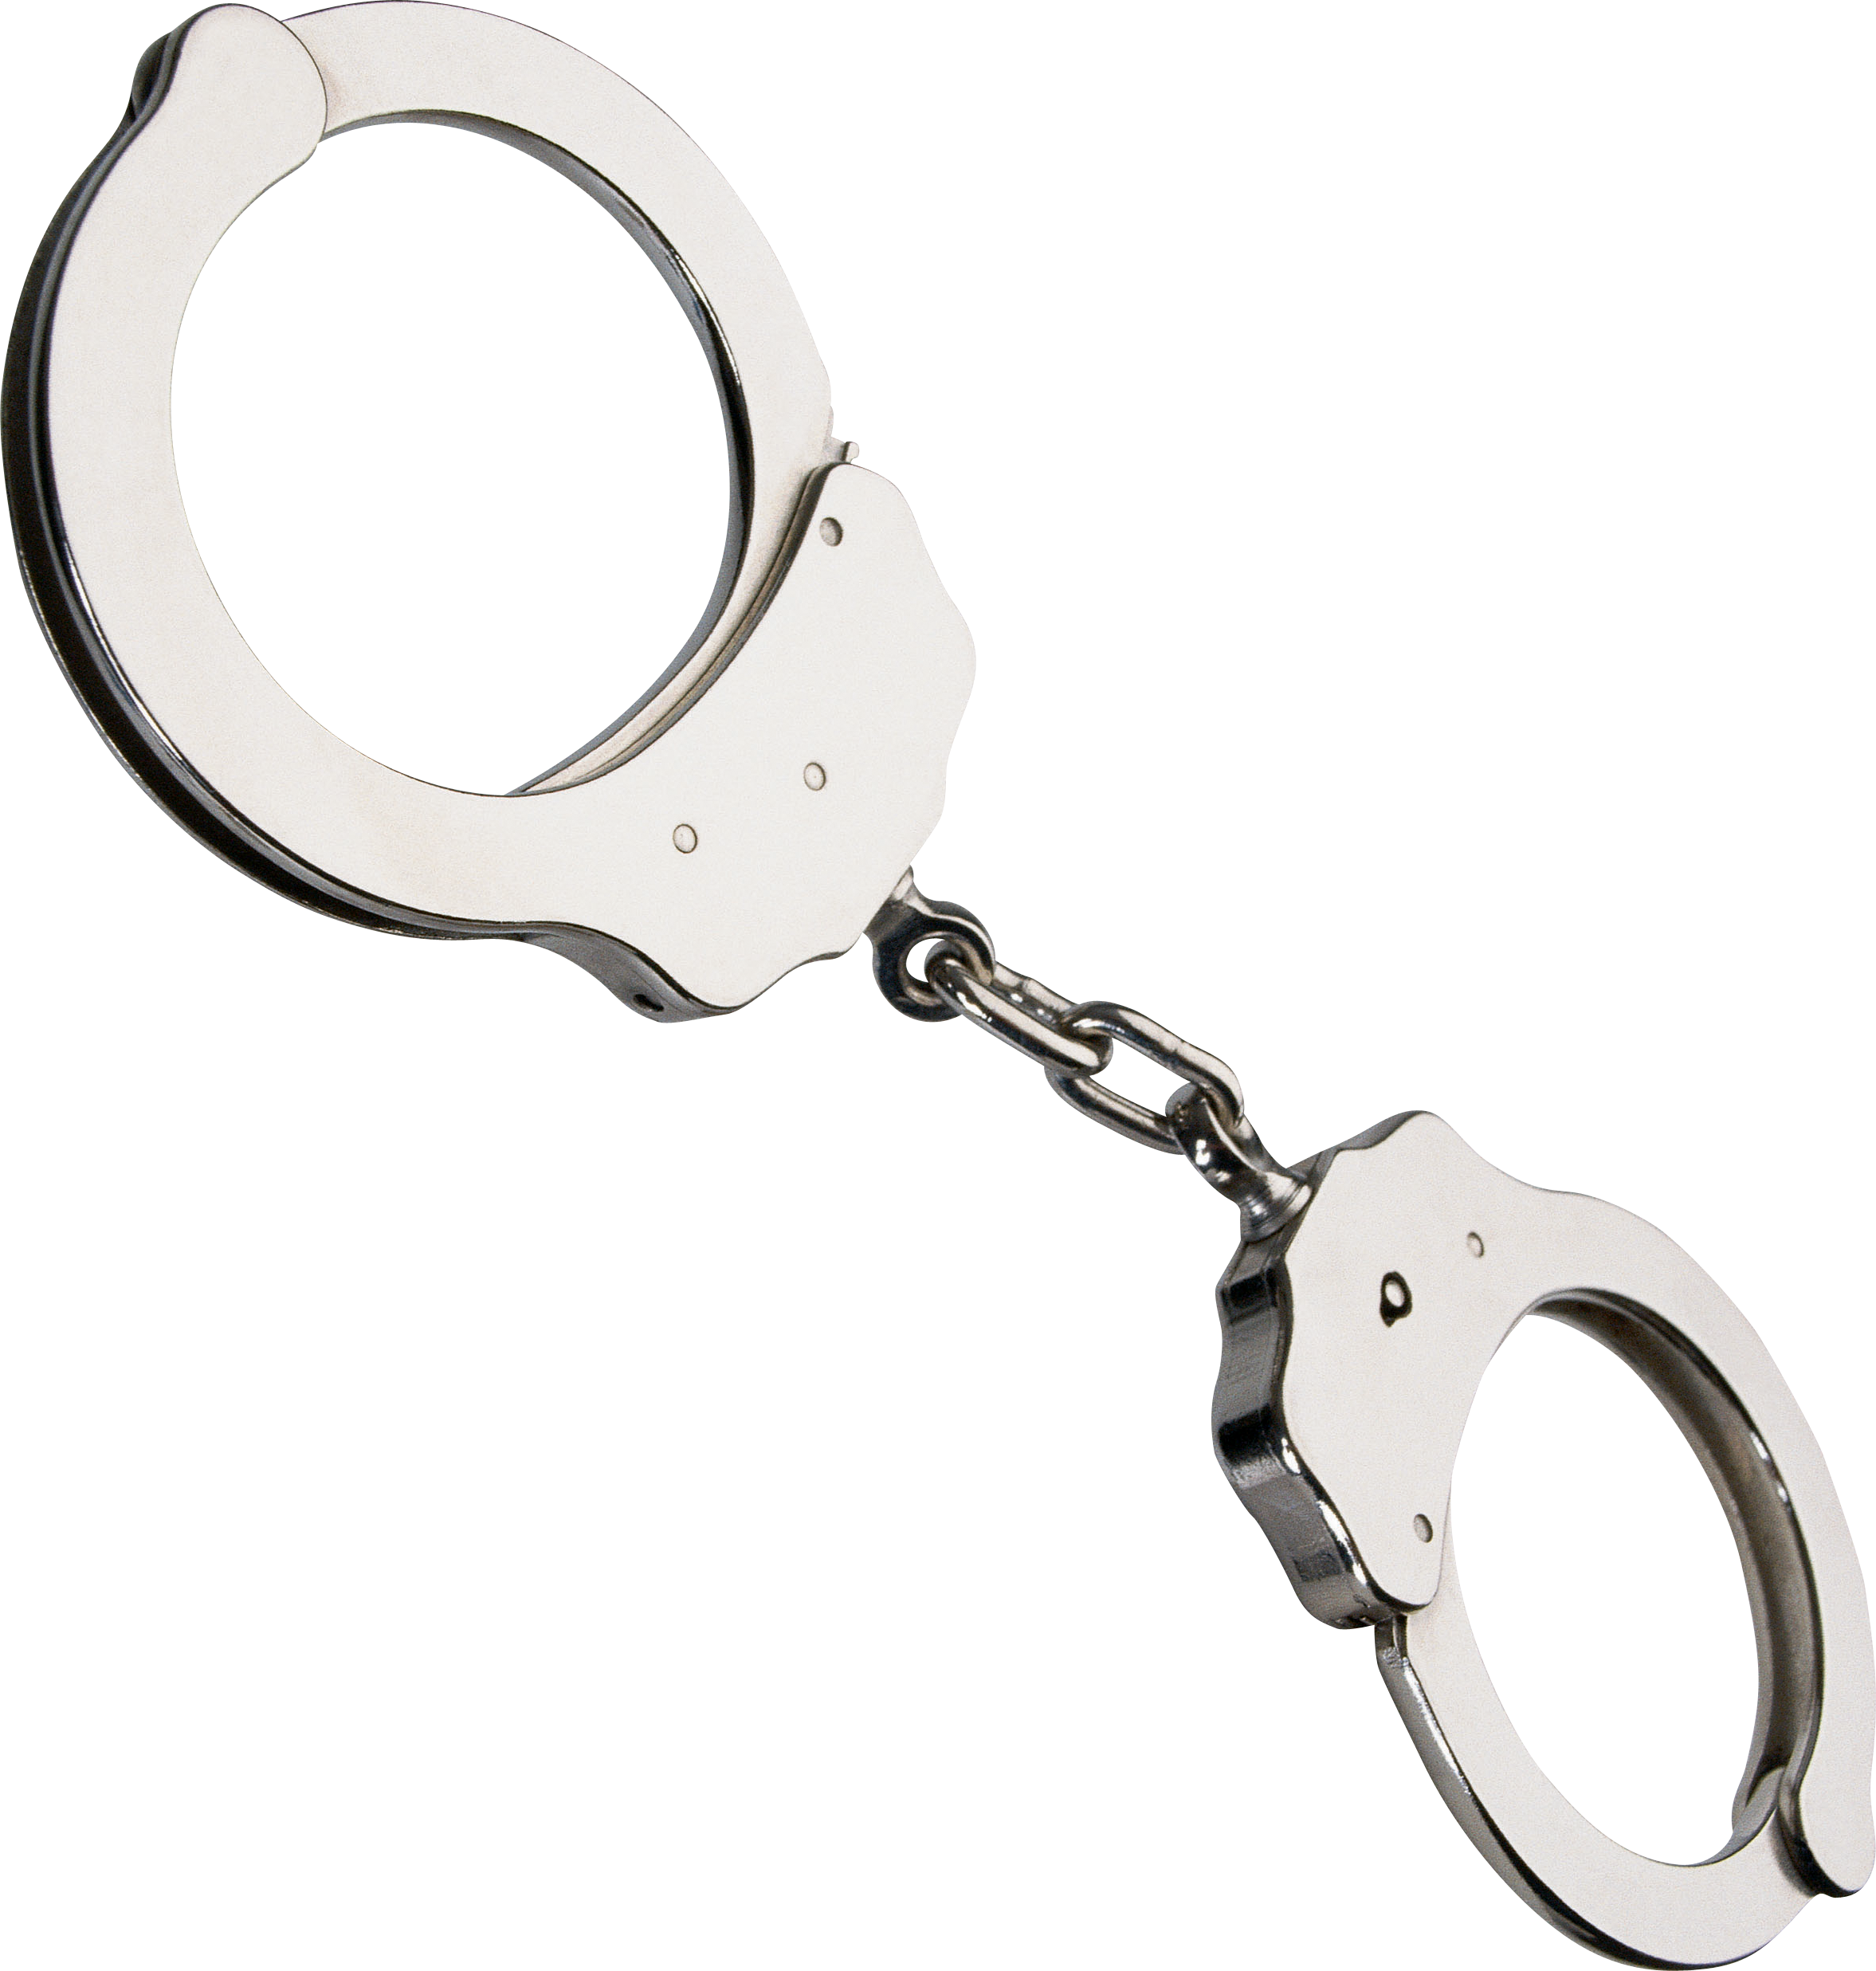 Handcuff clipart handcuff key. Silver handcuffs png image